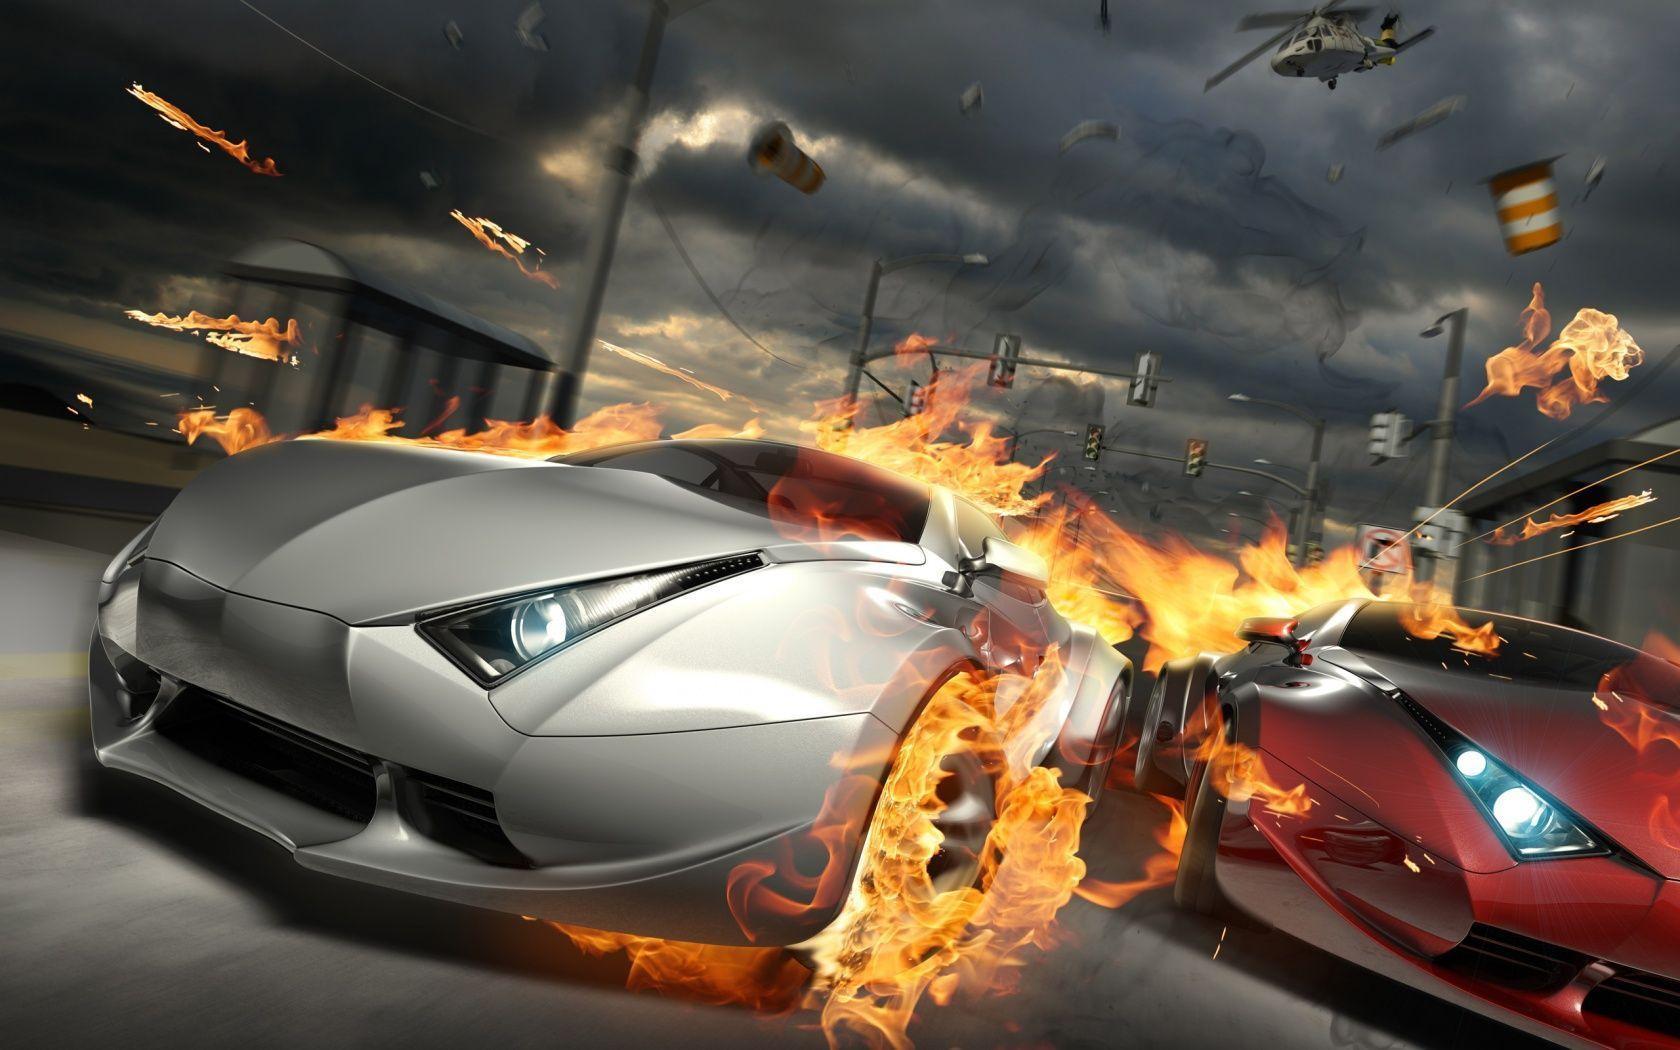 Destructive Car Race Wallpaper